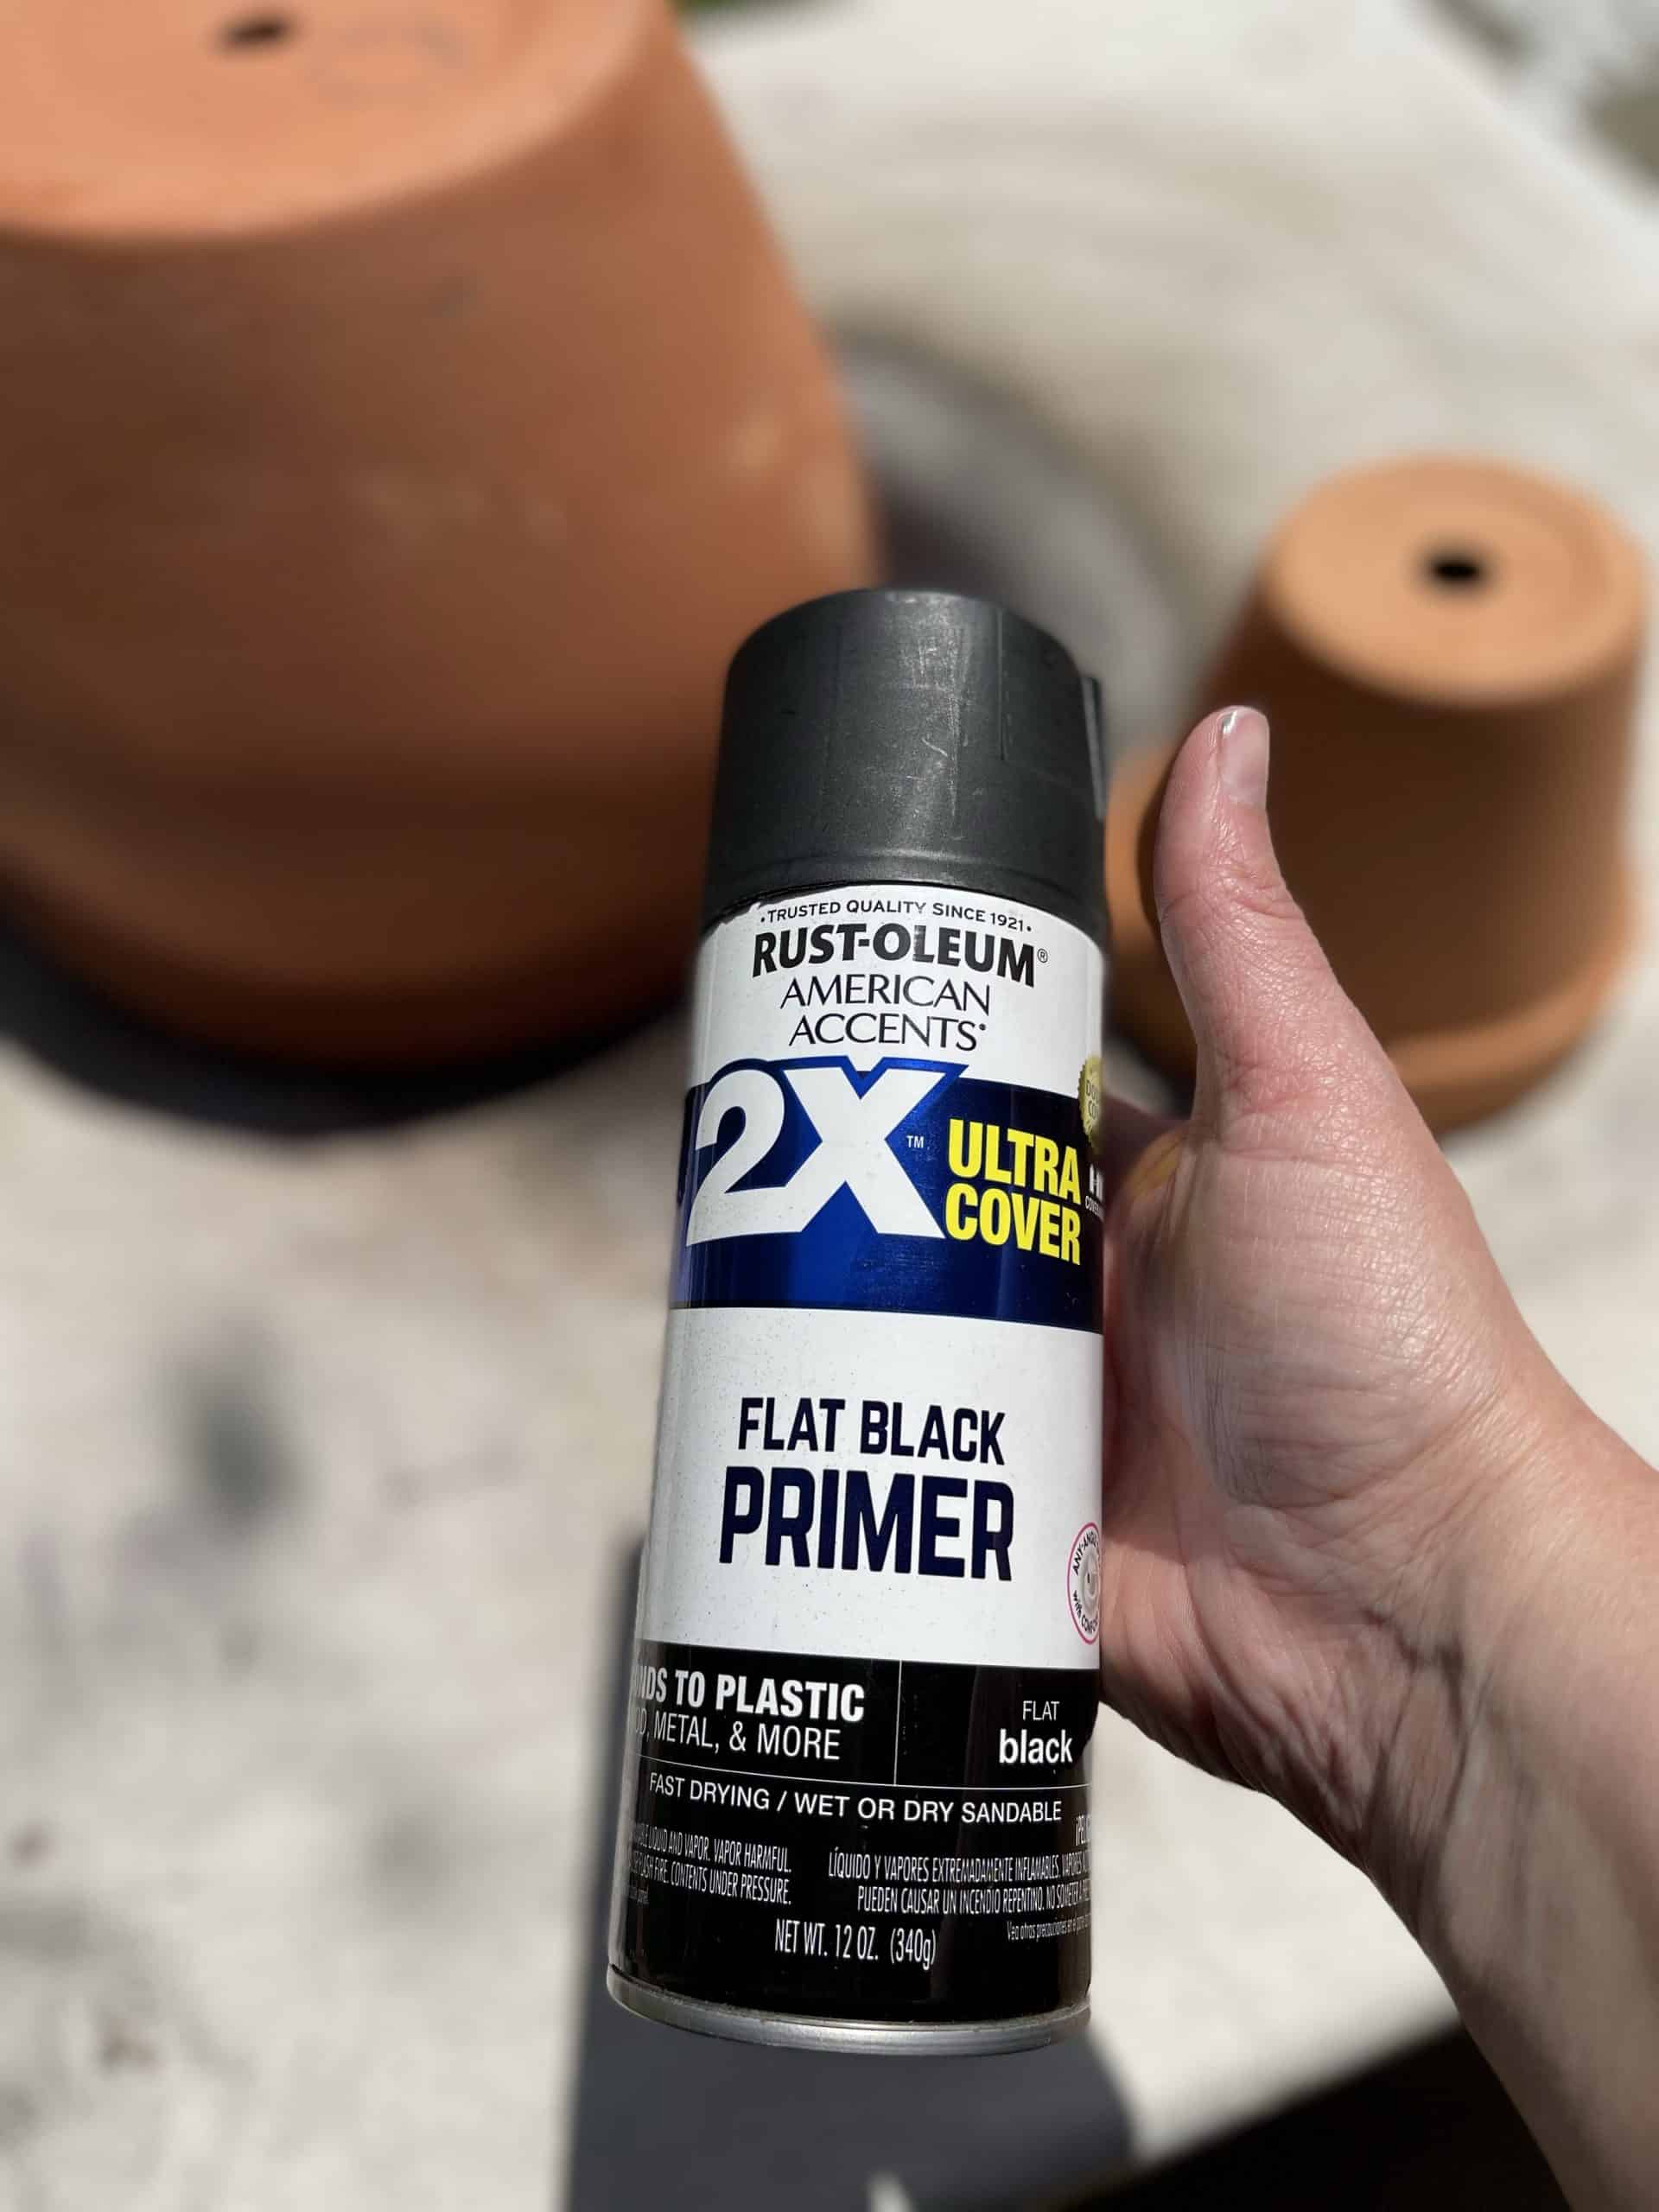 Rustoleum flat black primer spray paint can